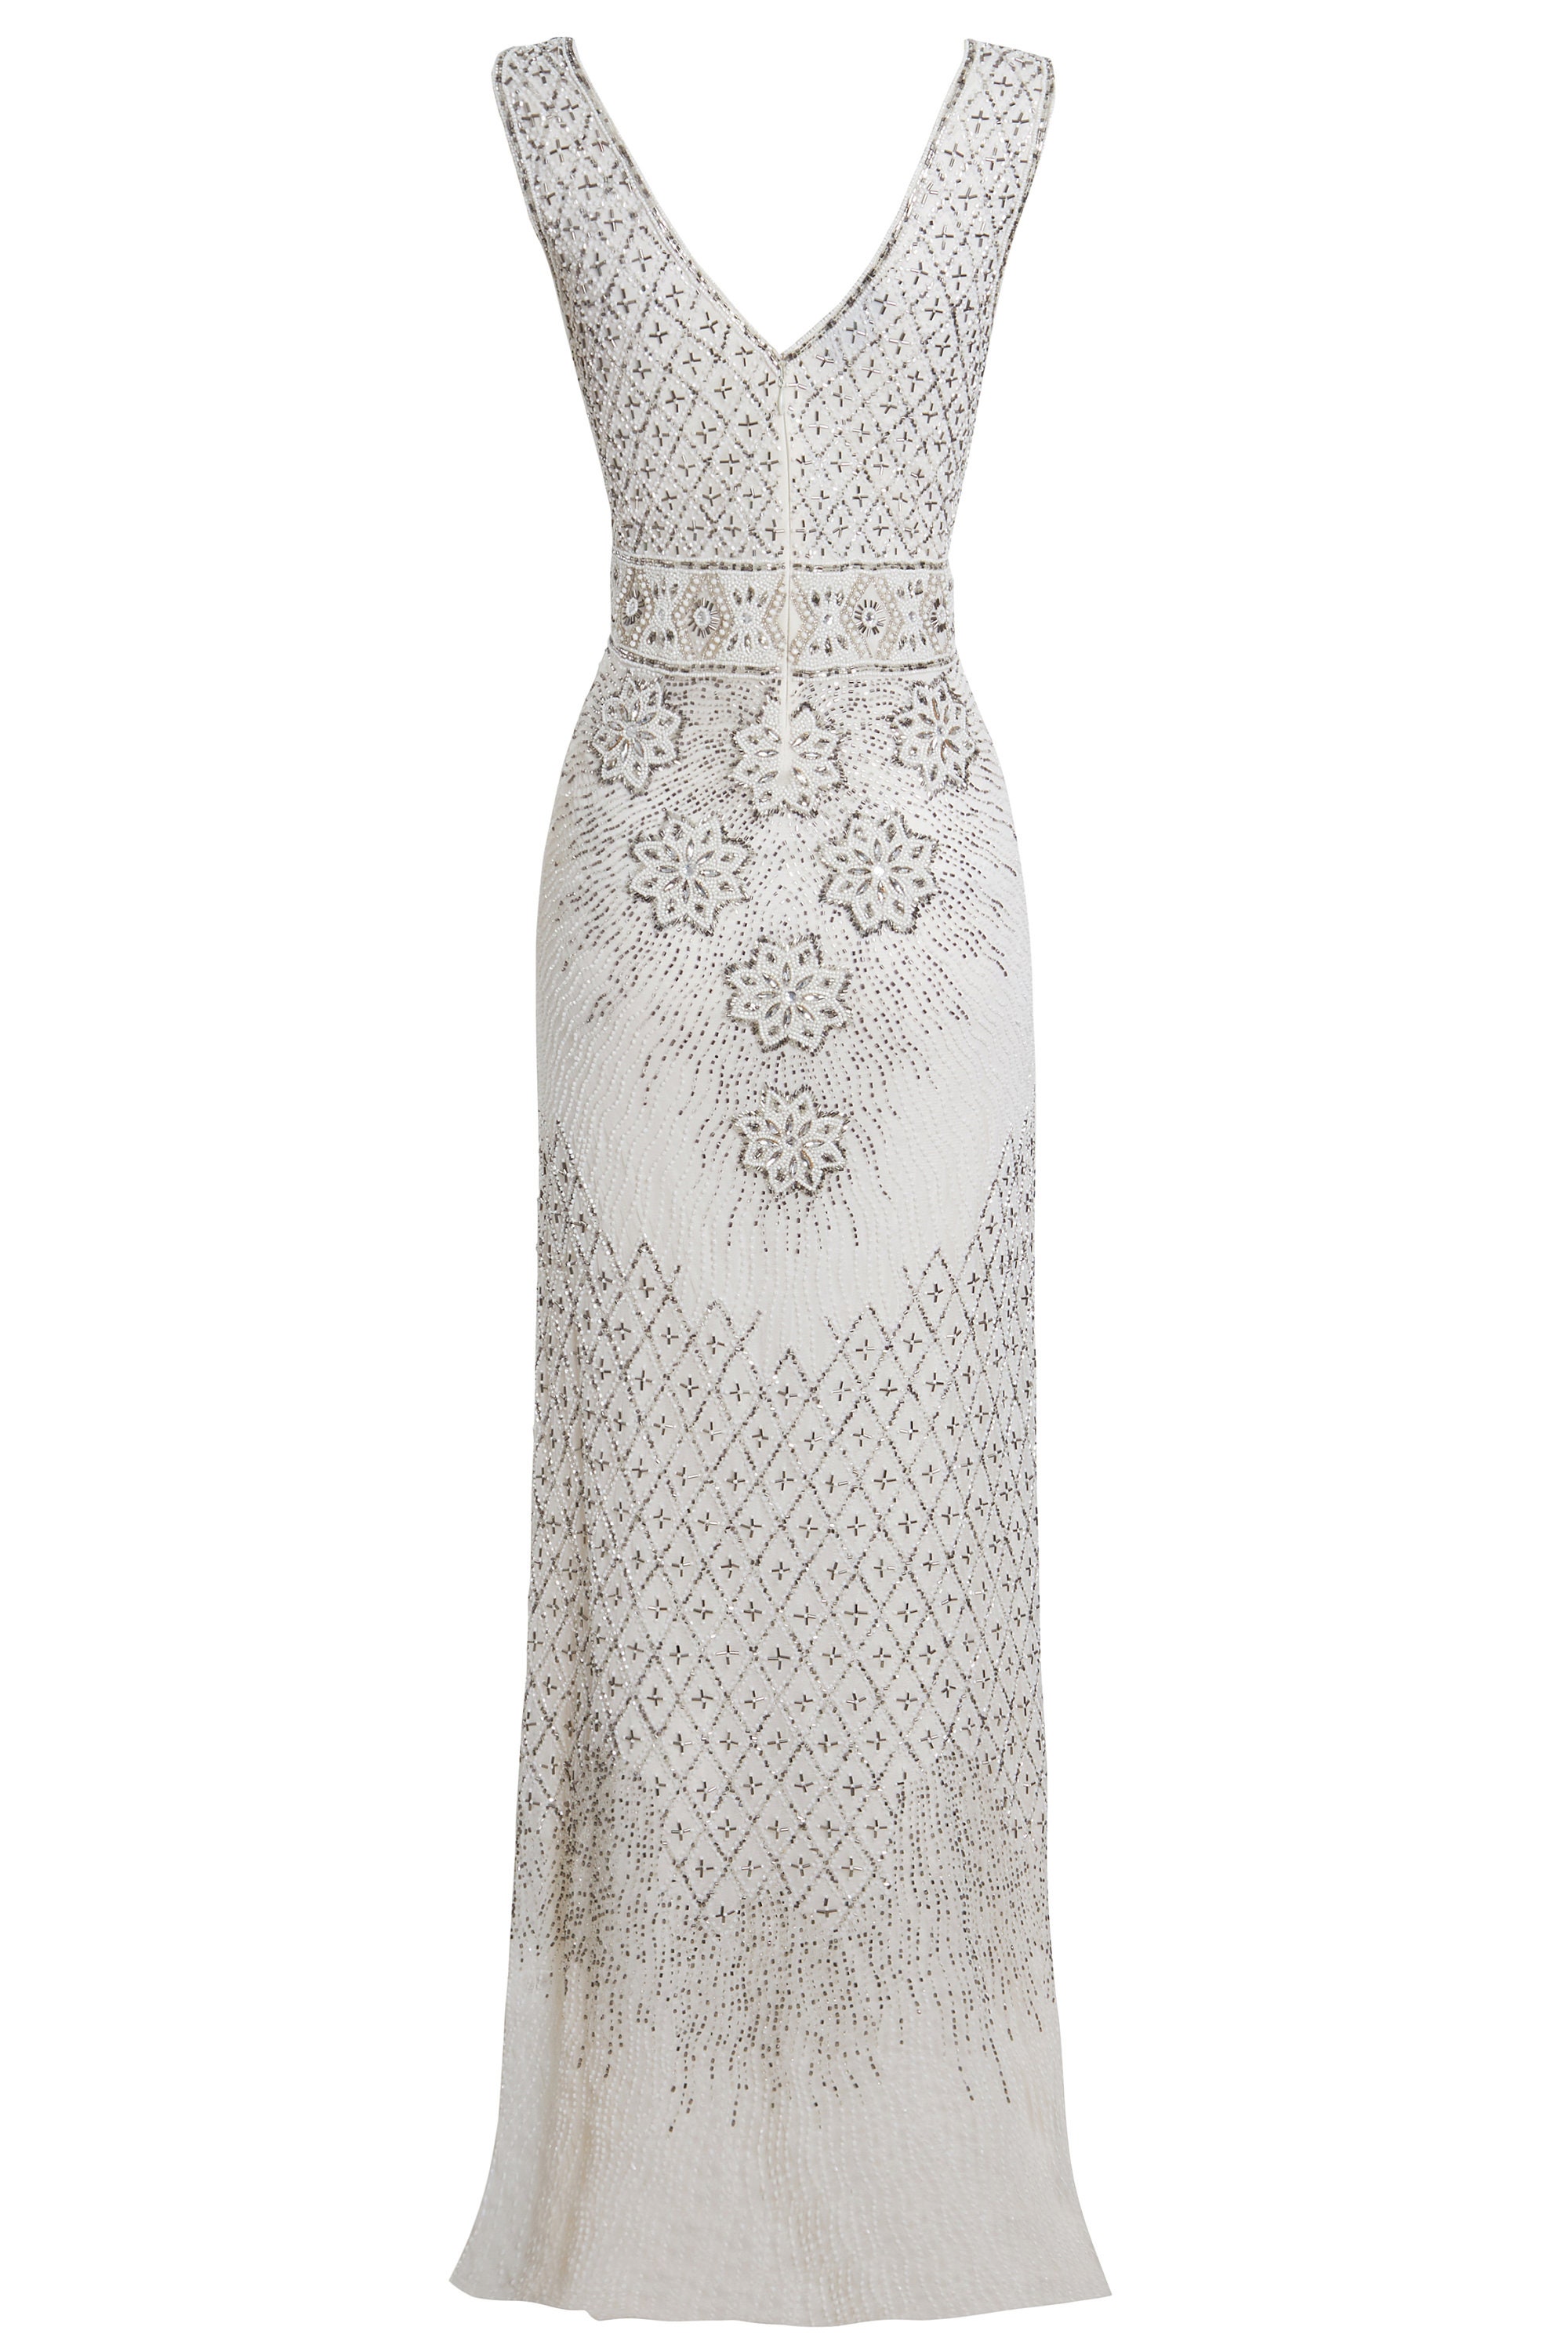 Hazel White Heavy Beaded Bridal Dress 1920s Gatsby Inspired - Etsy